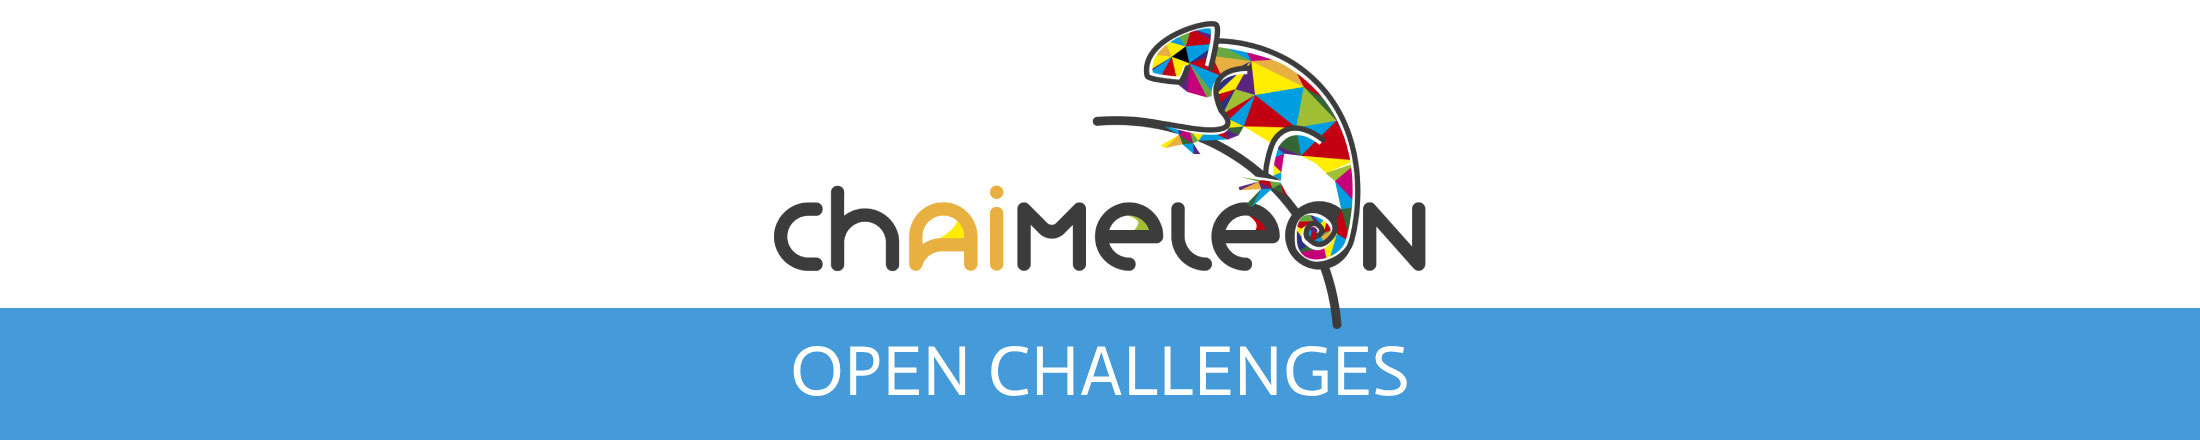 CHAIMELEON Open Challenges Banner